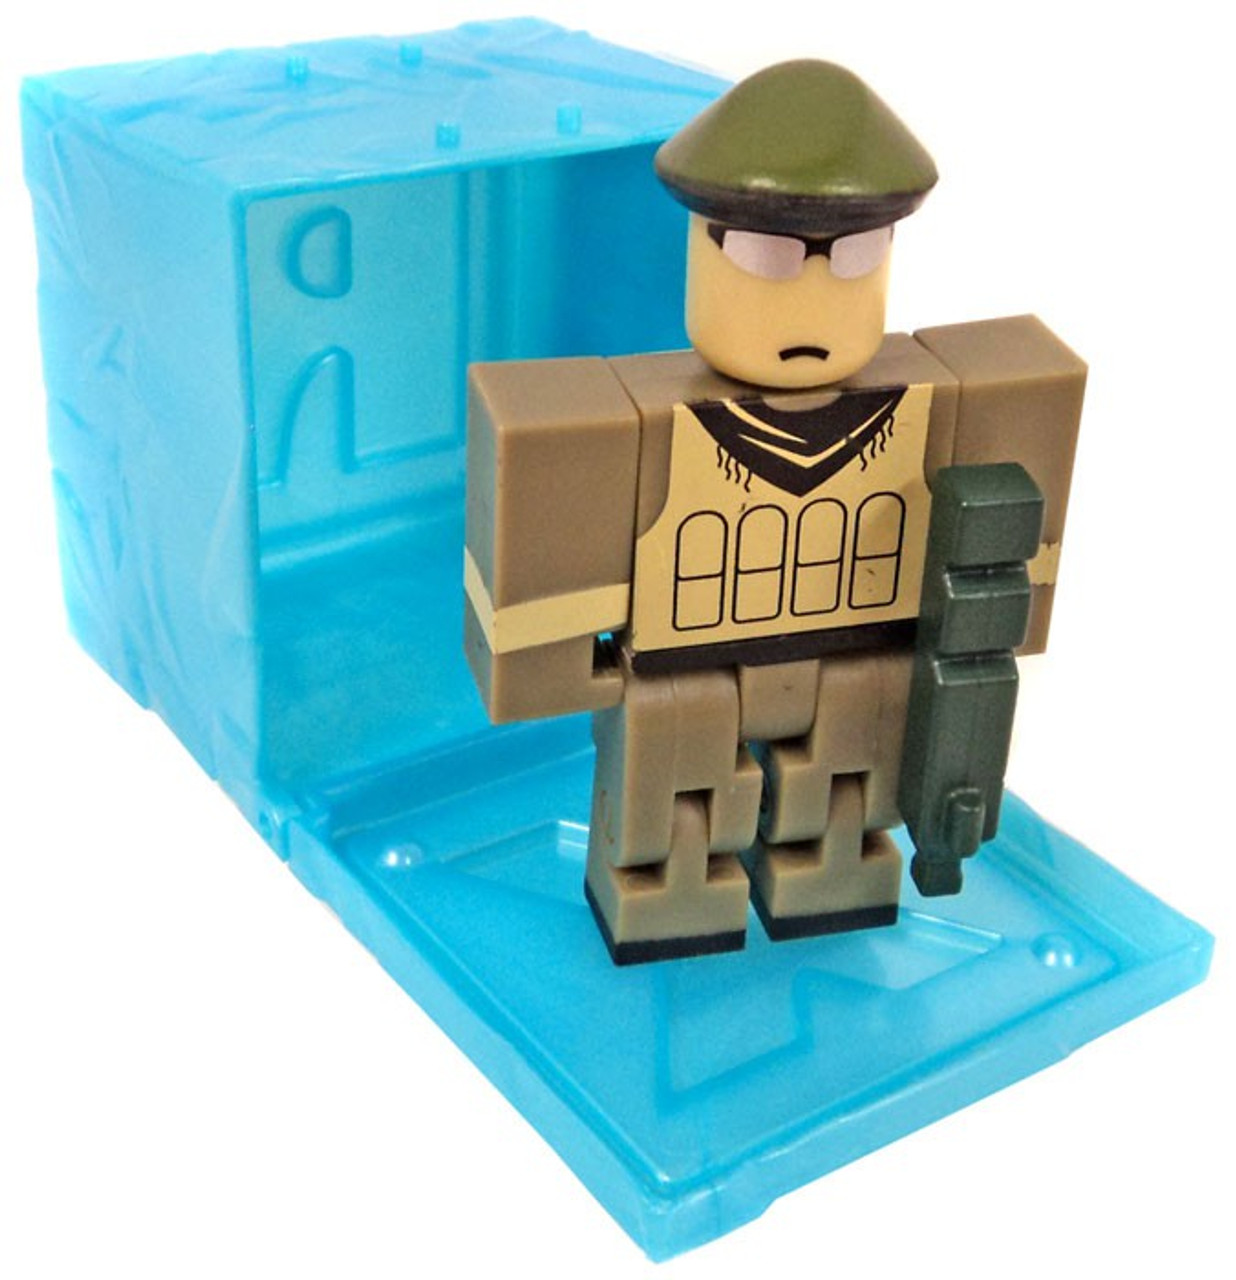 Ndjnnehxvjuglm - lumberjack tycoon roblox series 3 blue box mystery pack toys figures no codes